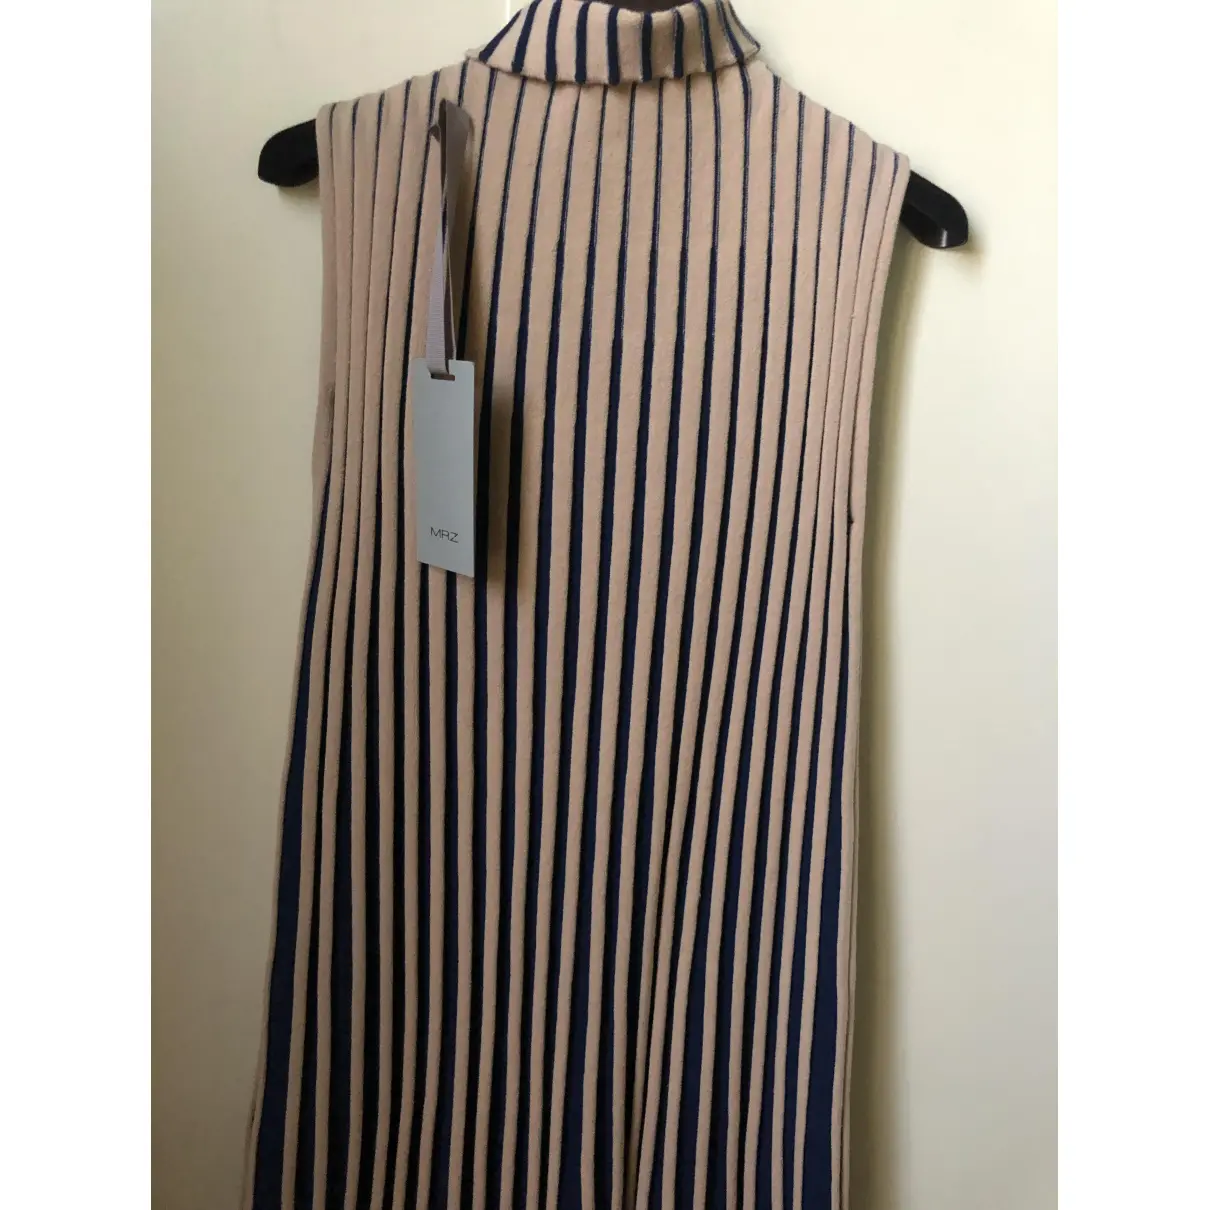 Buy Mrz Wool mid-length dress online